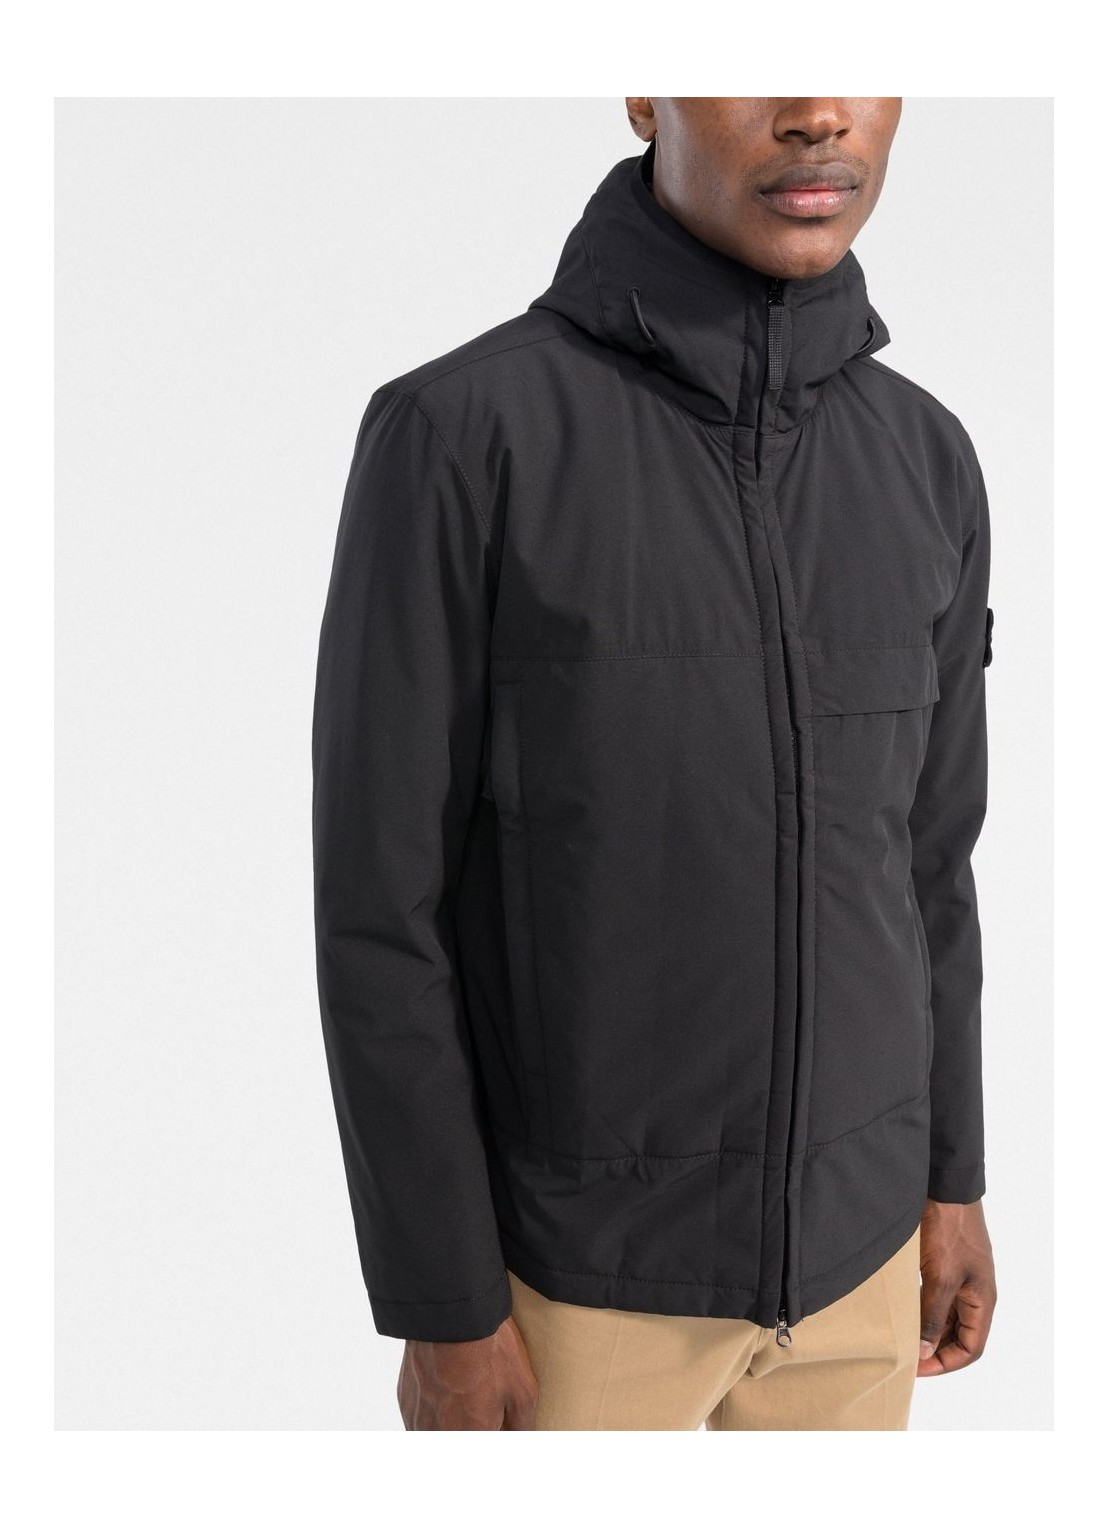 stone island outerwear man jacket 771540527 v0029 Talla XL Color negro